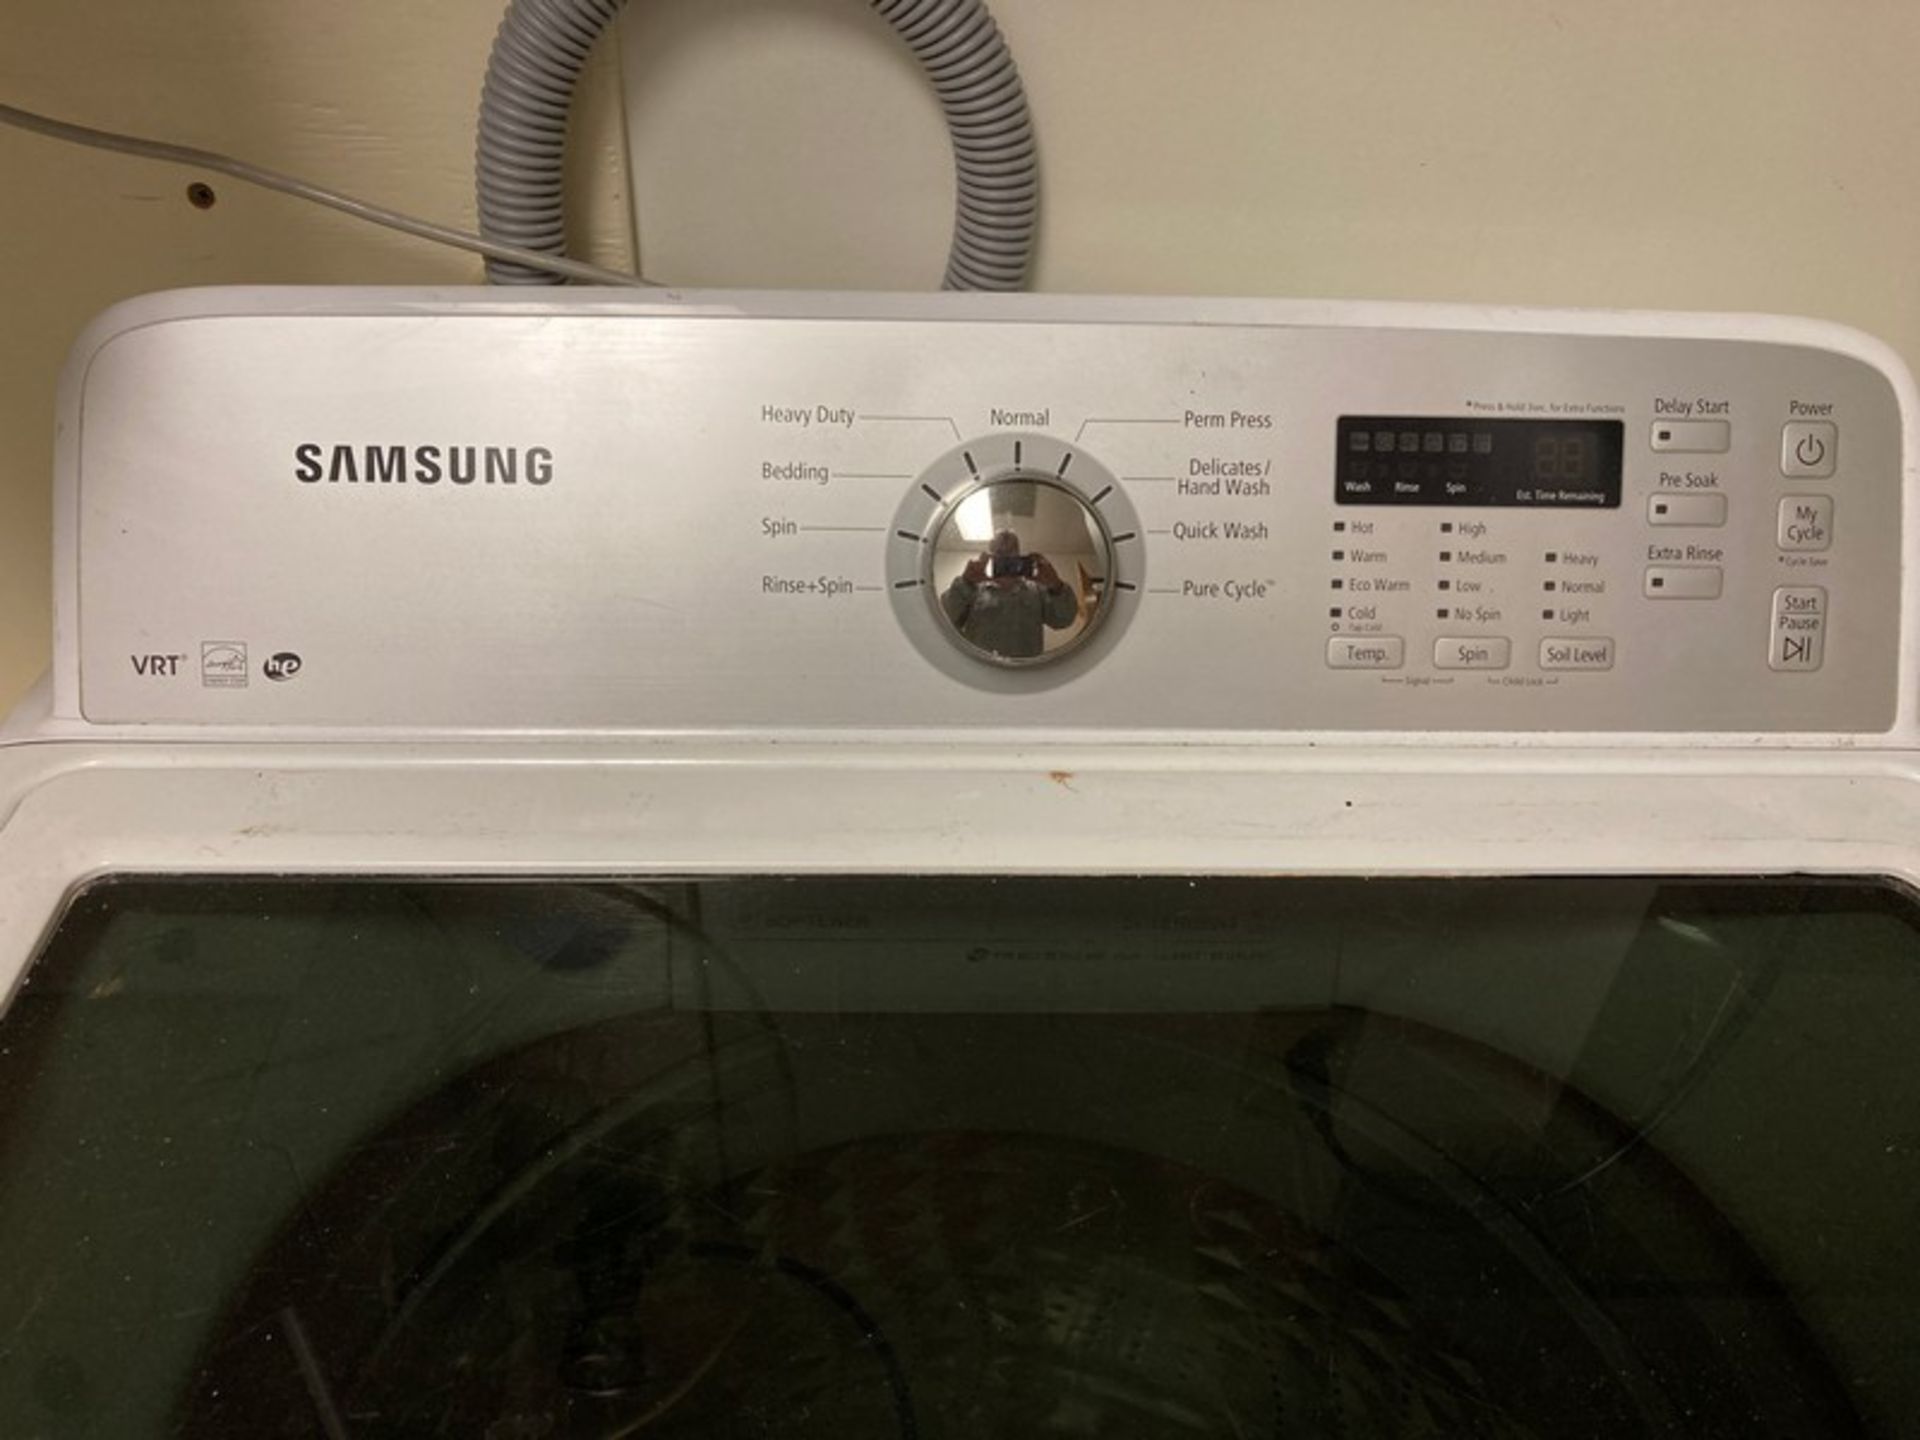 Samsung Hi-Efficiency Top Load Washer VRT / Working / Not Used for Lab Items. (Elevator Handling Fee